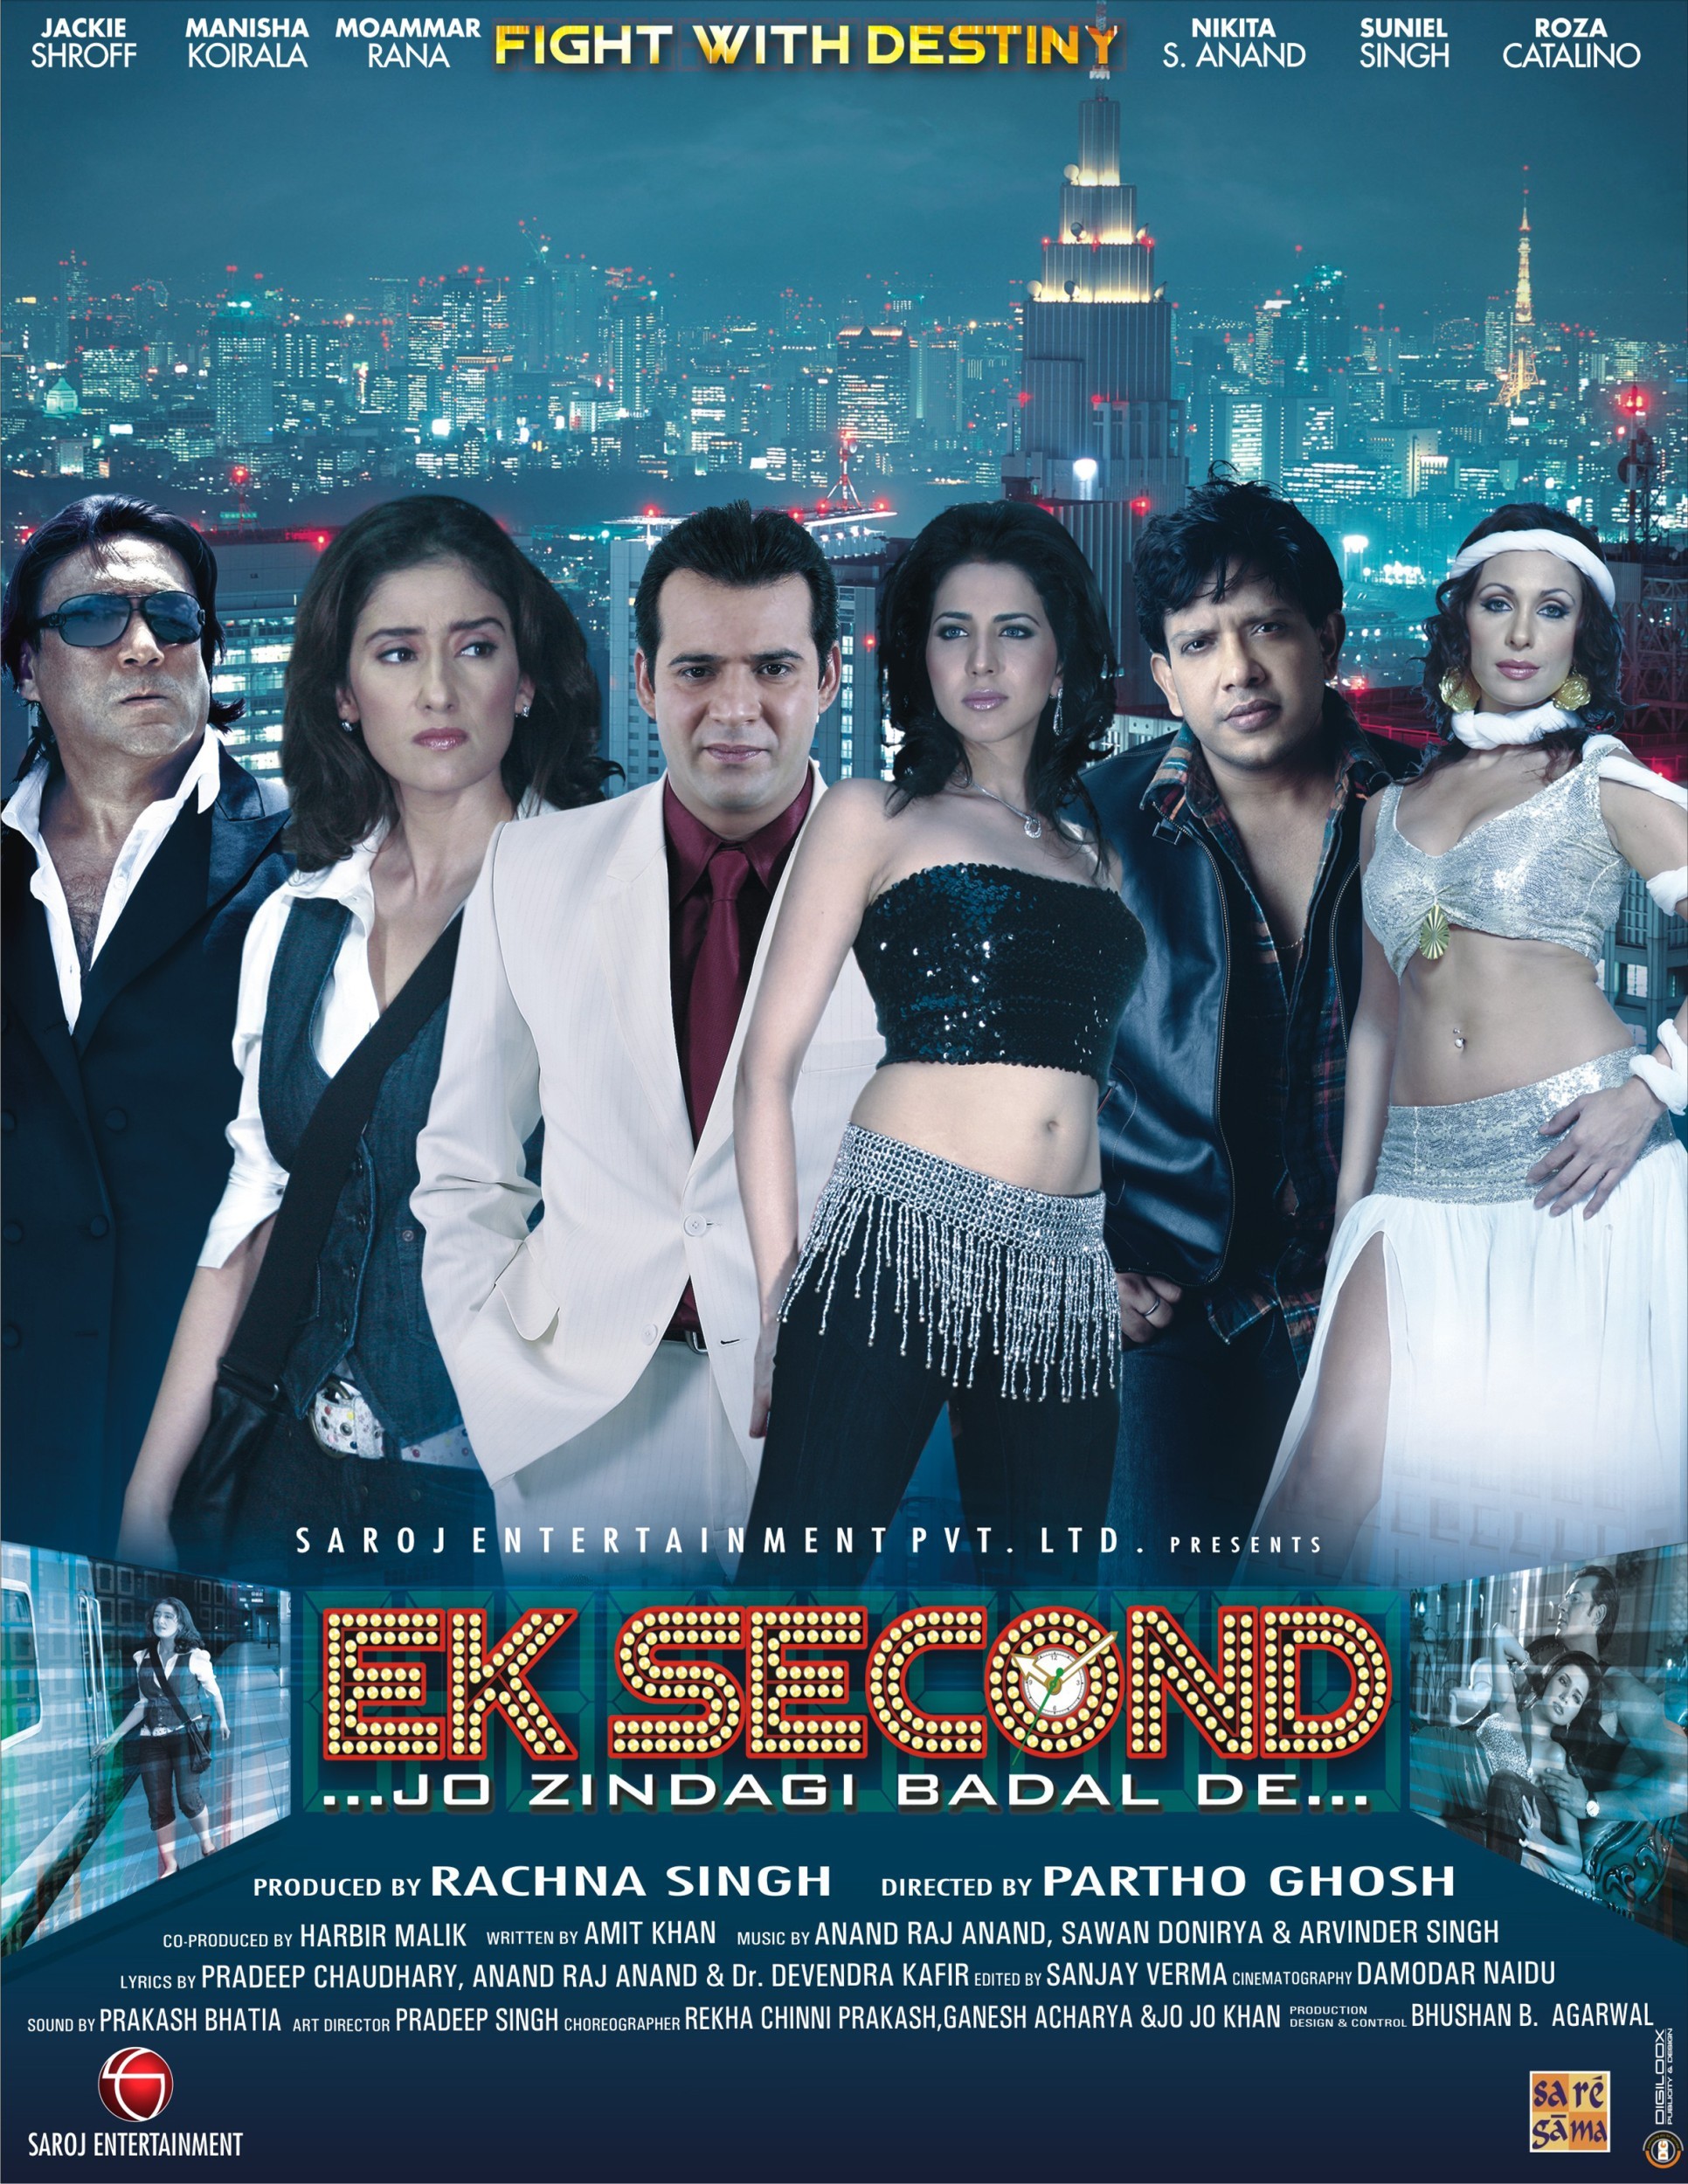 Mega Sized Movie Poster Image for Ek Second... Jo Zindagi Badal De... 